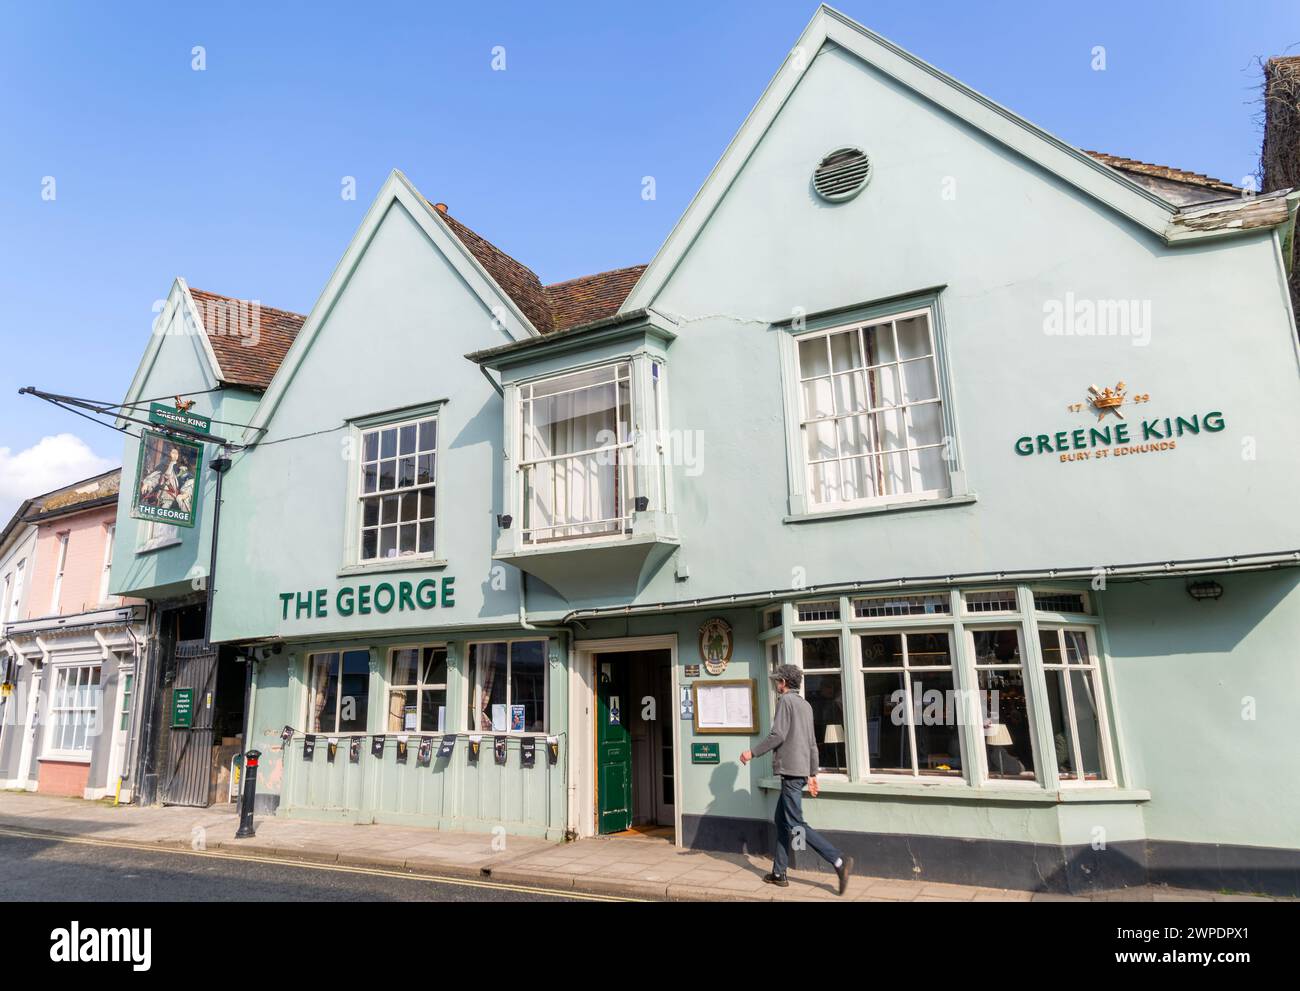 The George Inn pub, Greene King brewery, Hadliegh, Suffolk, England, UK Stock Photo